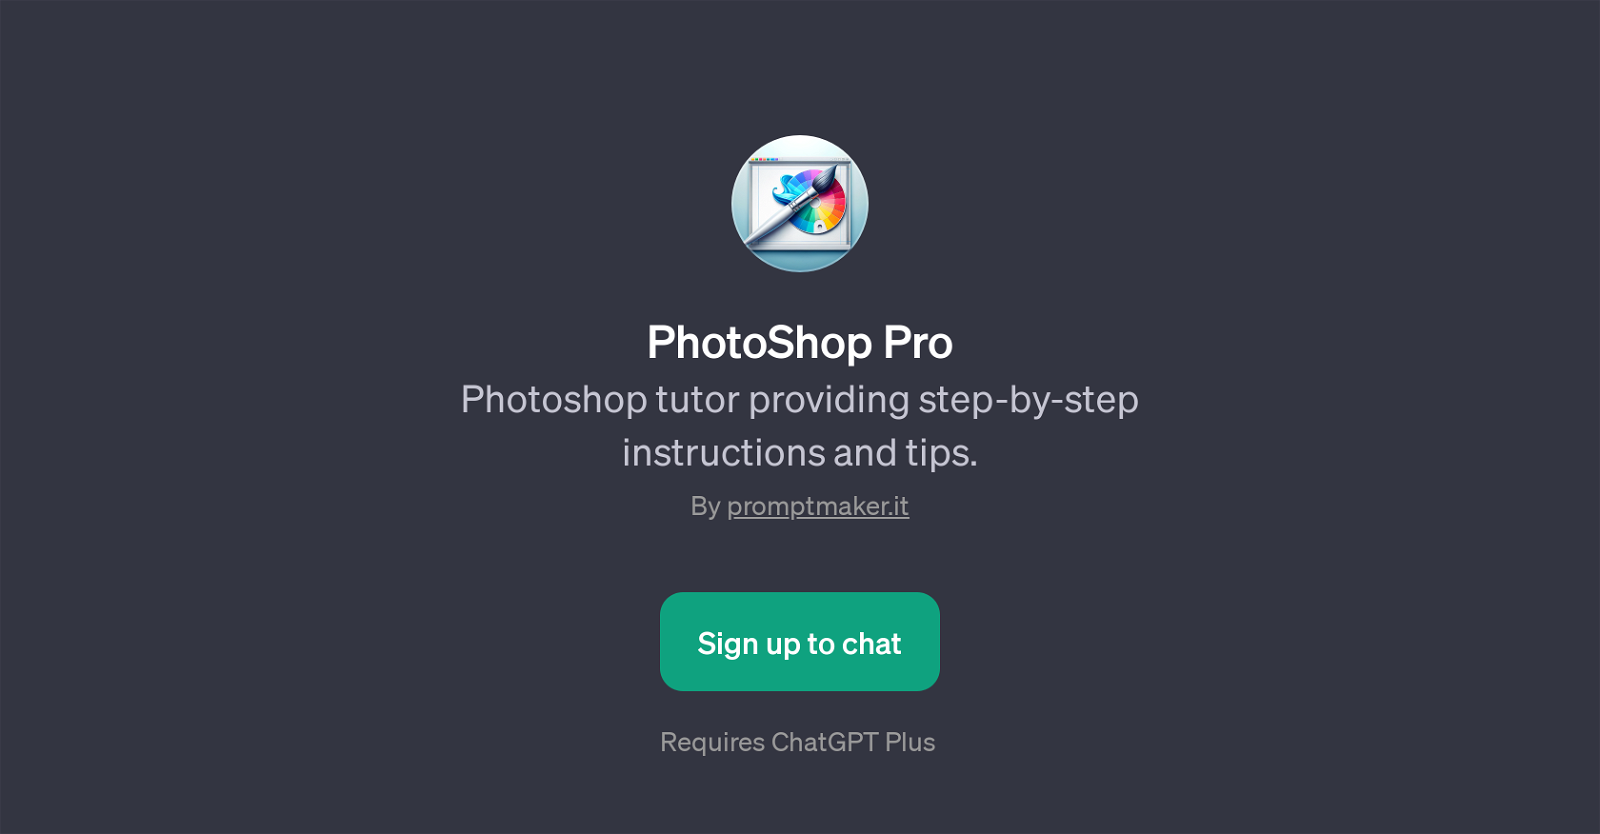 PhotoShop Pro website